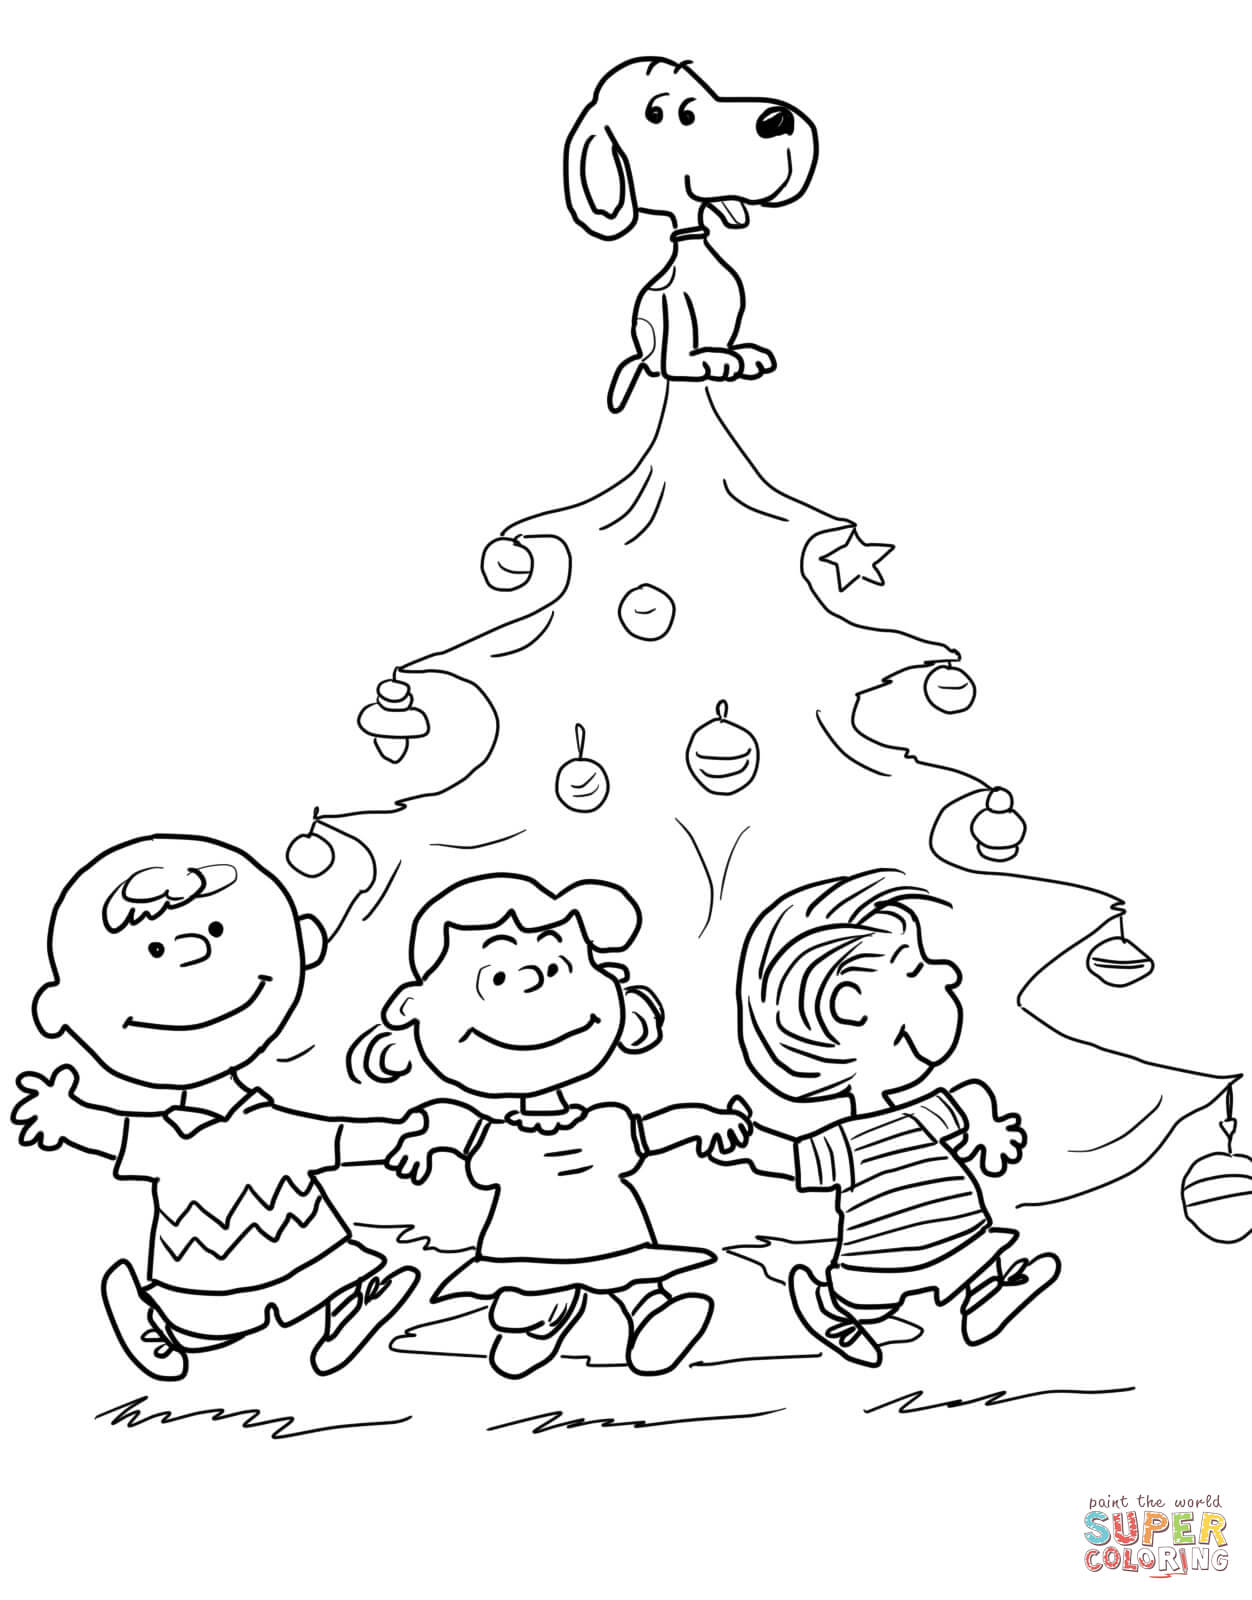 Charlie Brown Christmas Tree coloring page